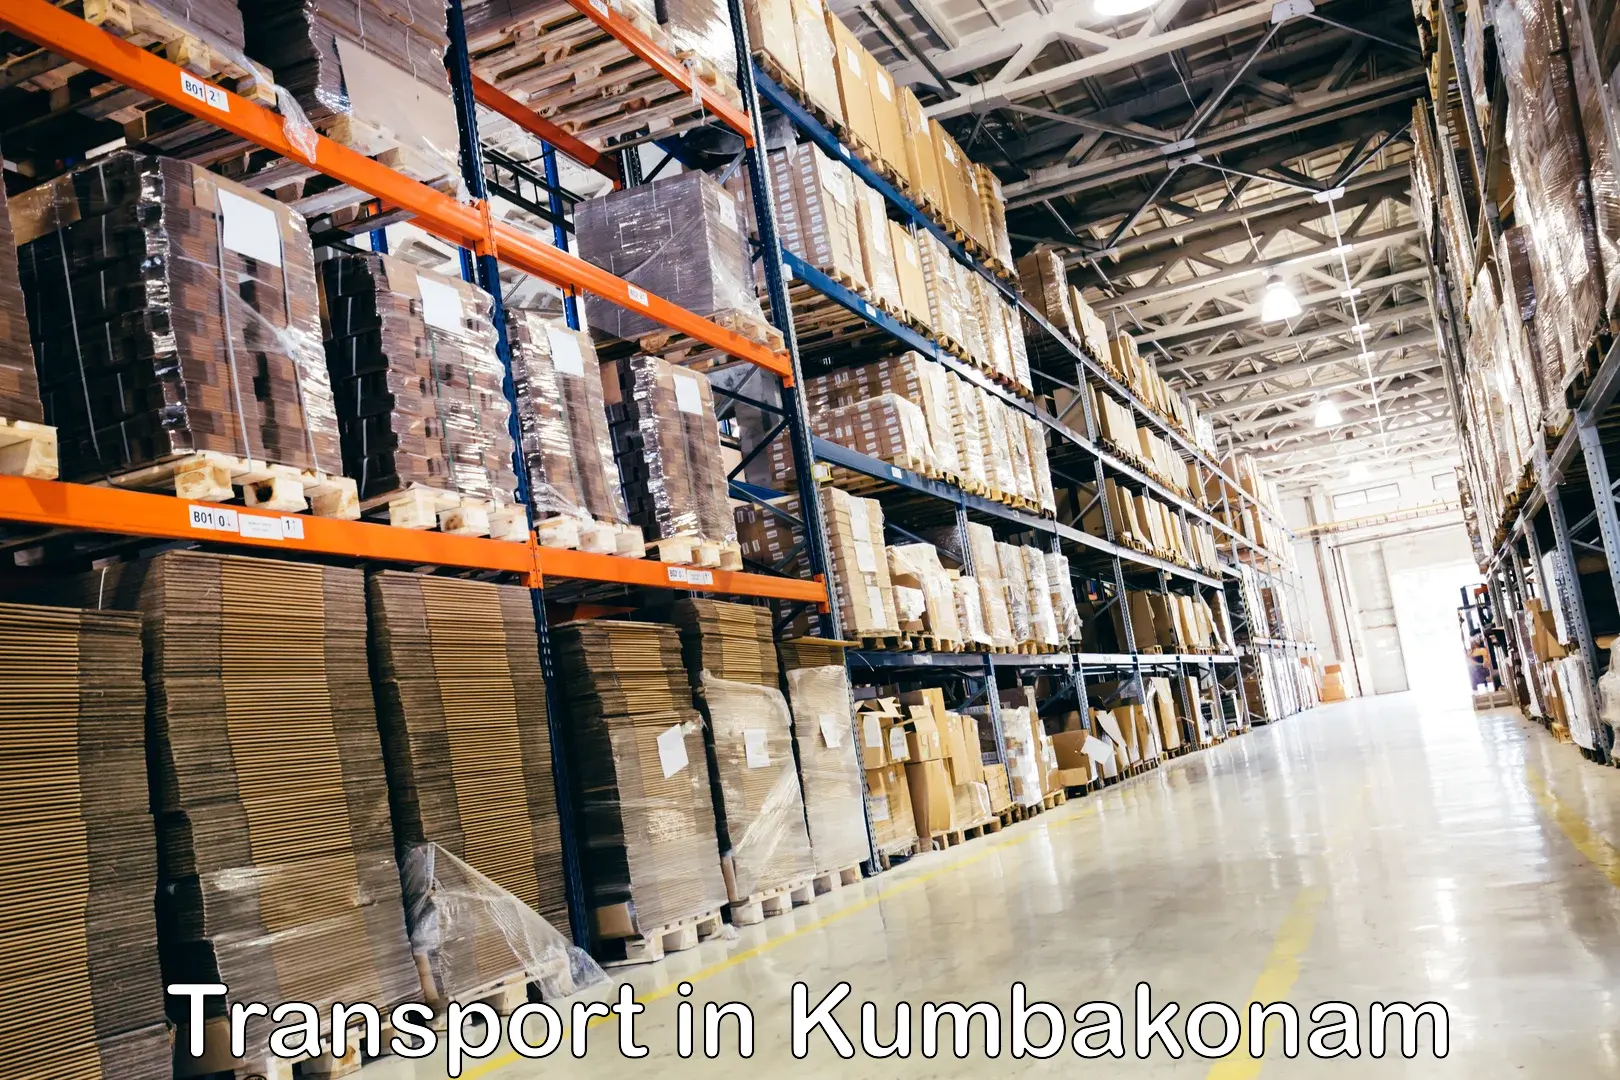 Air freight transport services in Kumbakonam